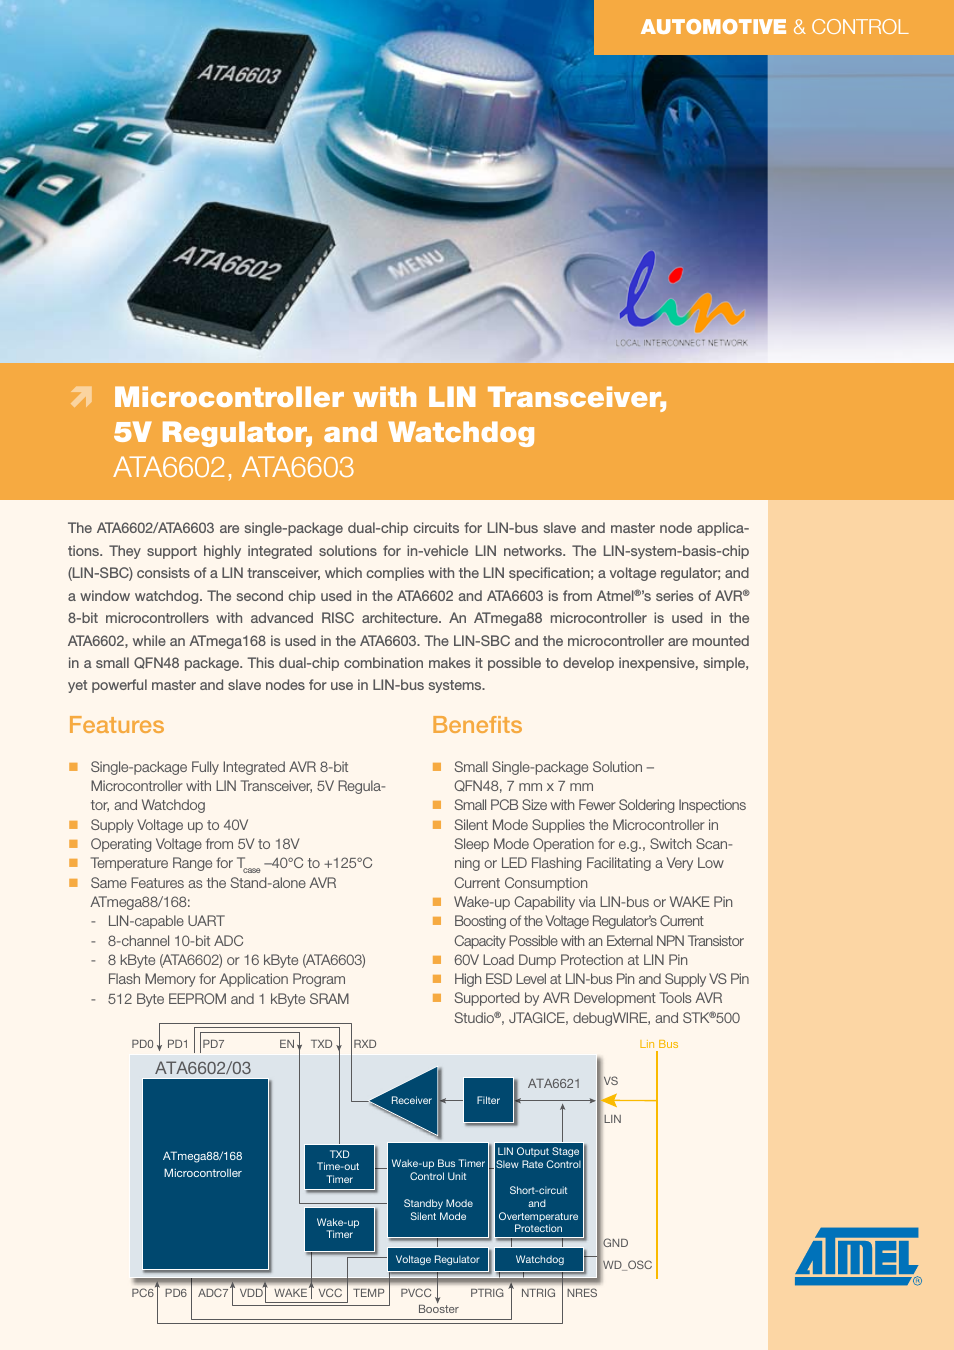 Microcontroller with LIN Transceiver ATA6603